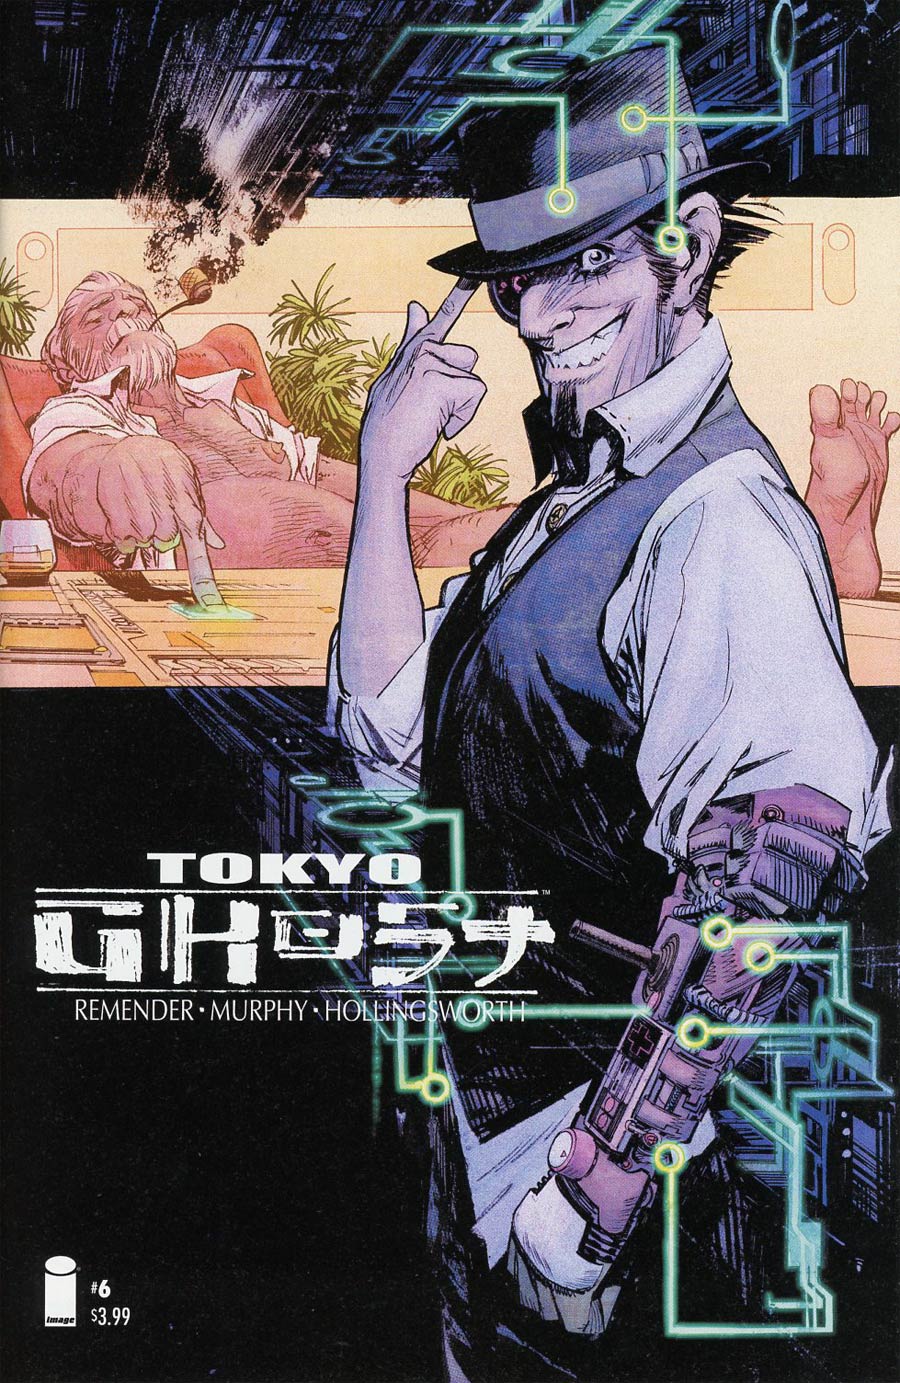 Tokyo Ghost #6 Cover A Sean Murphy & Matt Hollingsworth